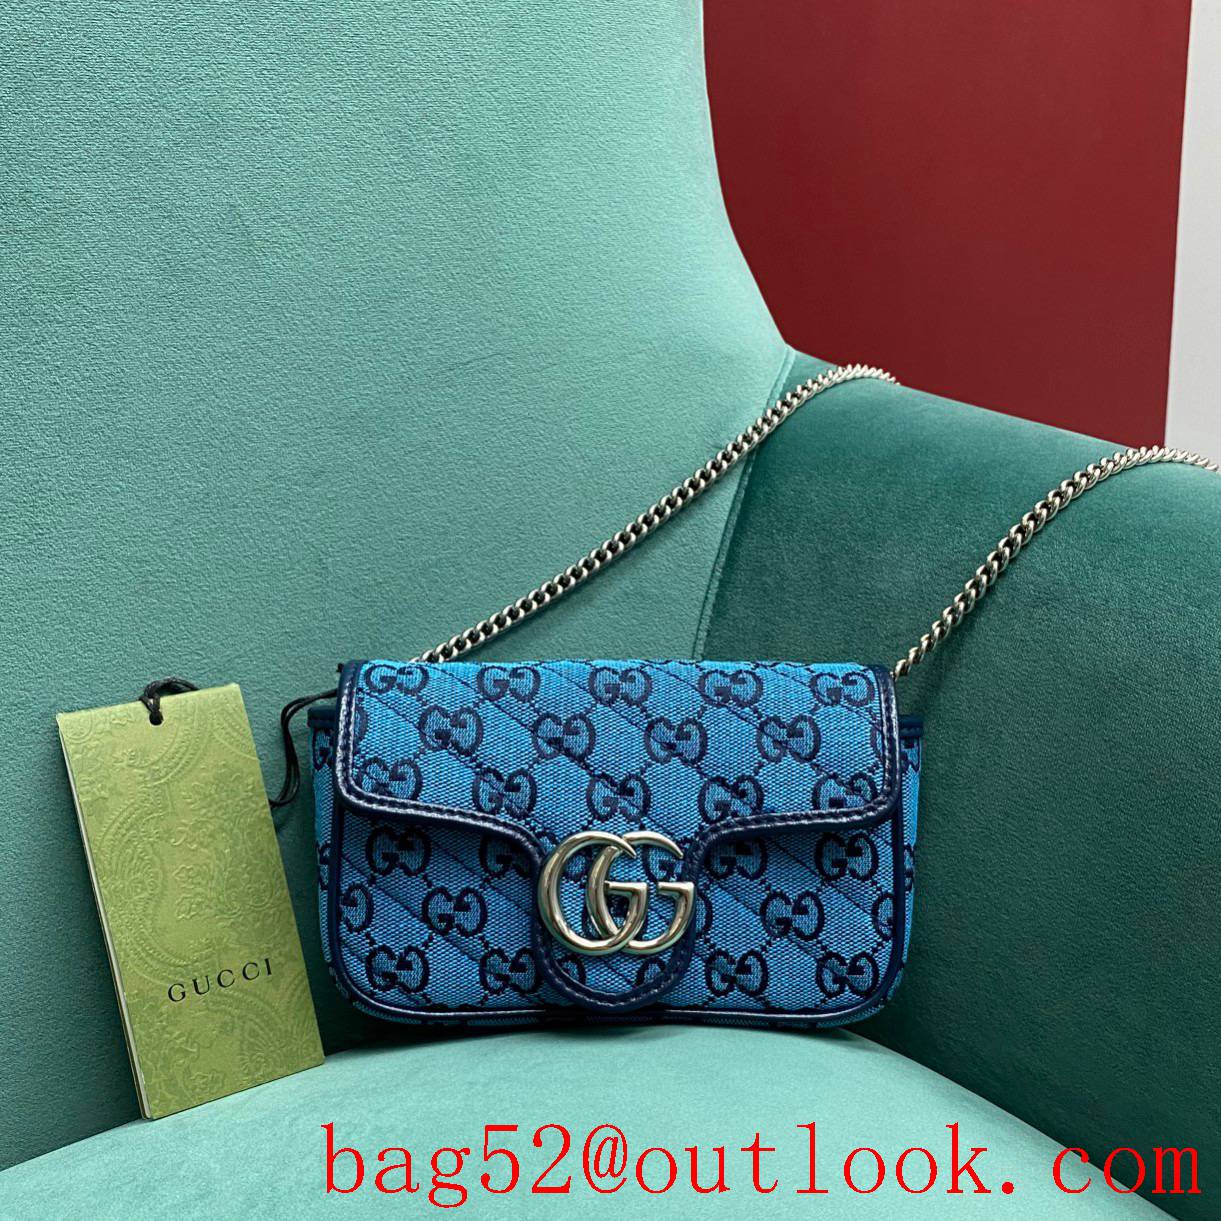 Gucci GG Nanomarmont Original Leather blue Sliver buckle chain shoulder handbag